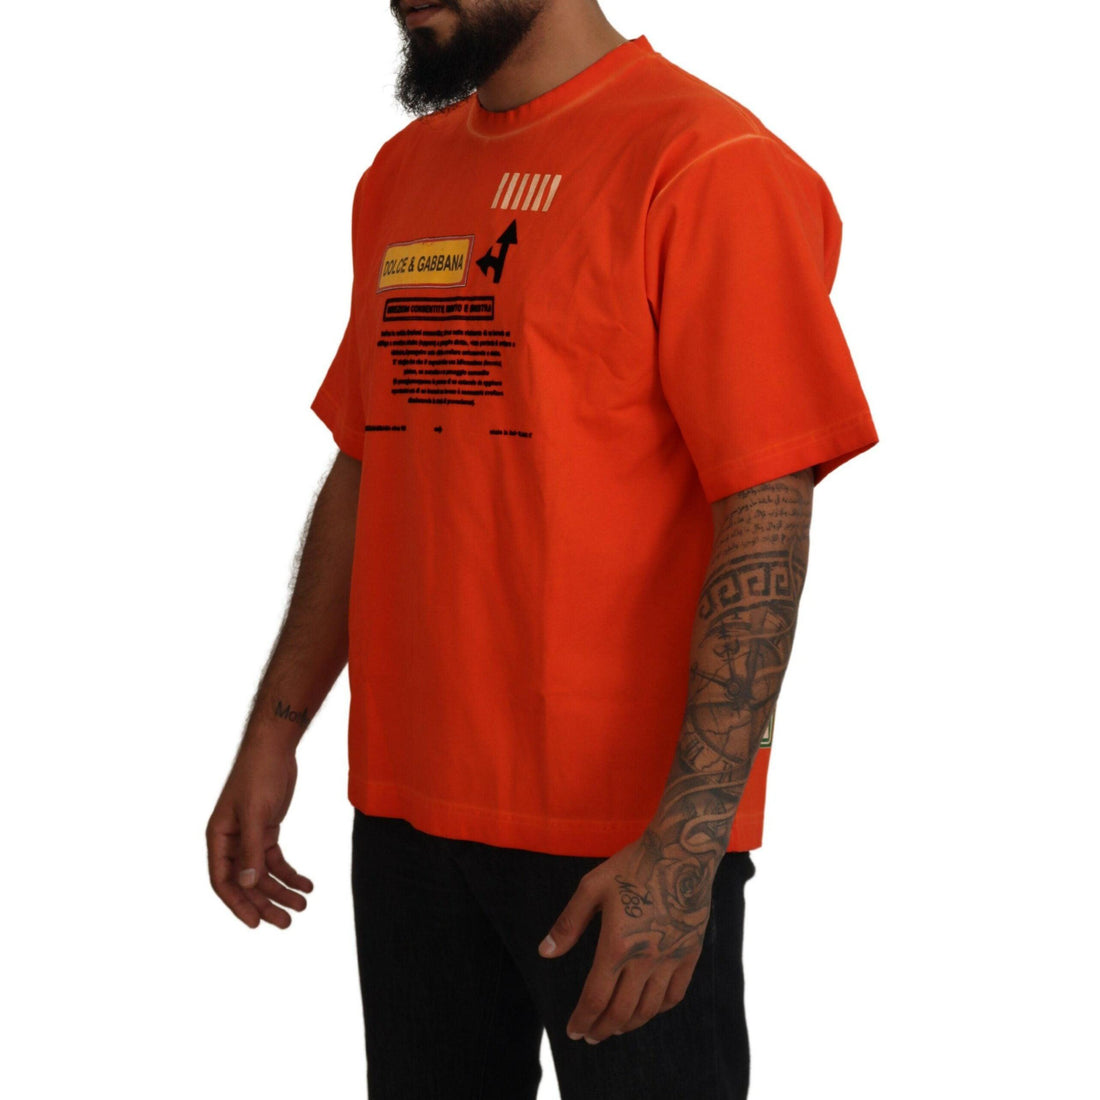 Dolce & Gabbana Orange Cotton Logo Short Sleeve T-shirt